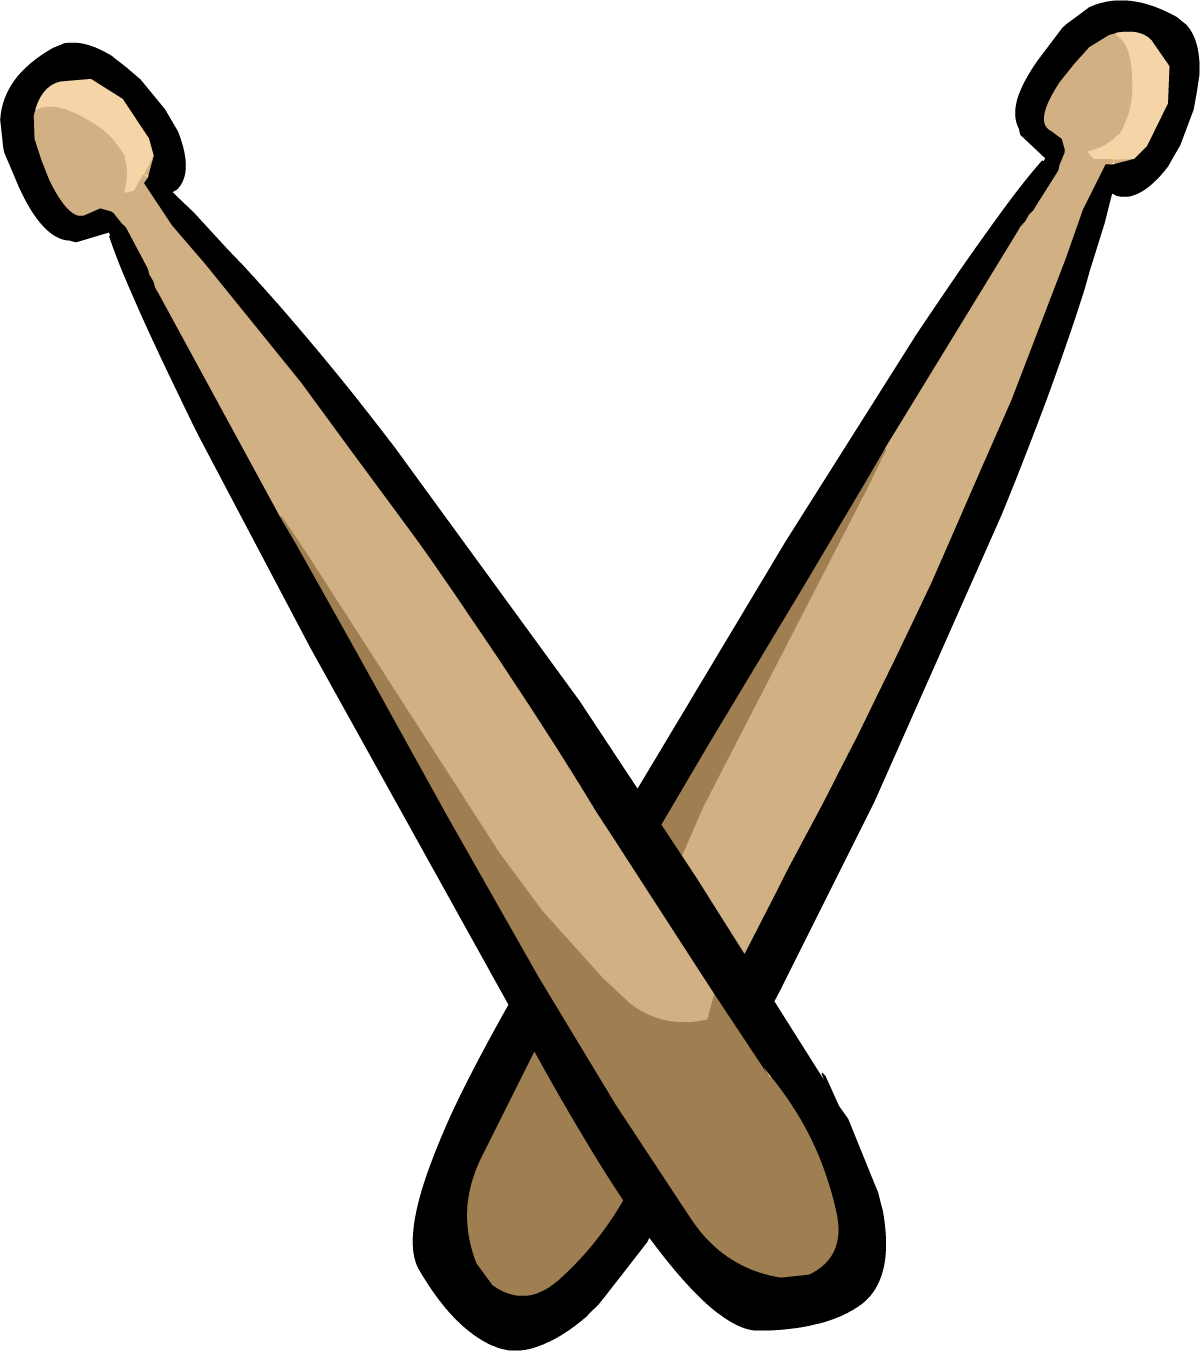 Drumsticks - Club Penguin Wiki - The free, editable encyclopedia 